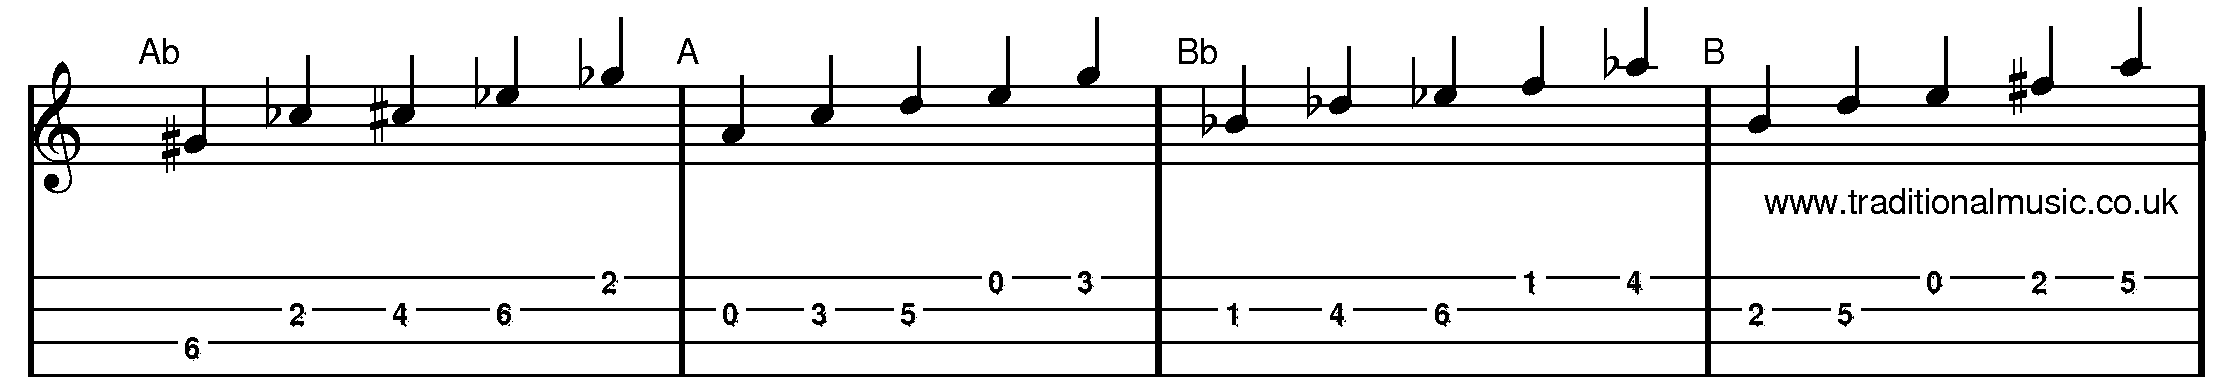 Minor Pentatonic Scales for Mandolin Ab to B